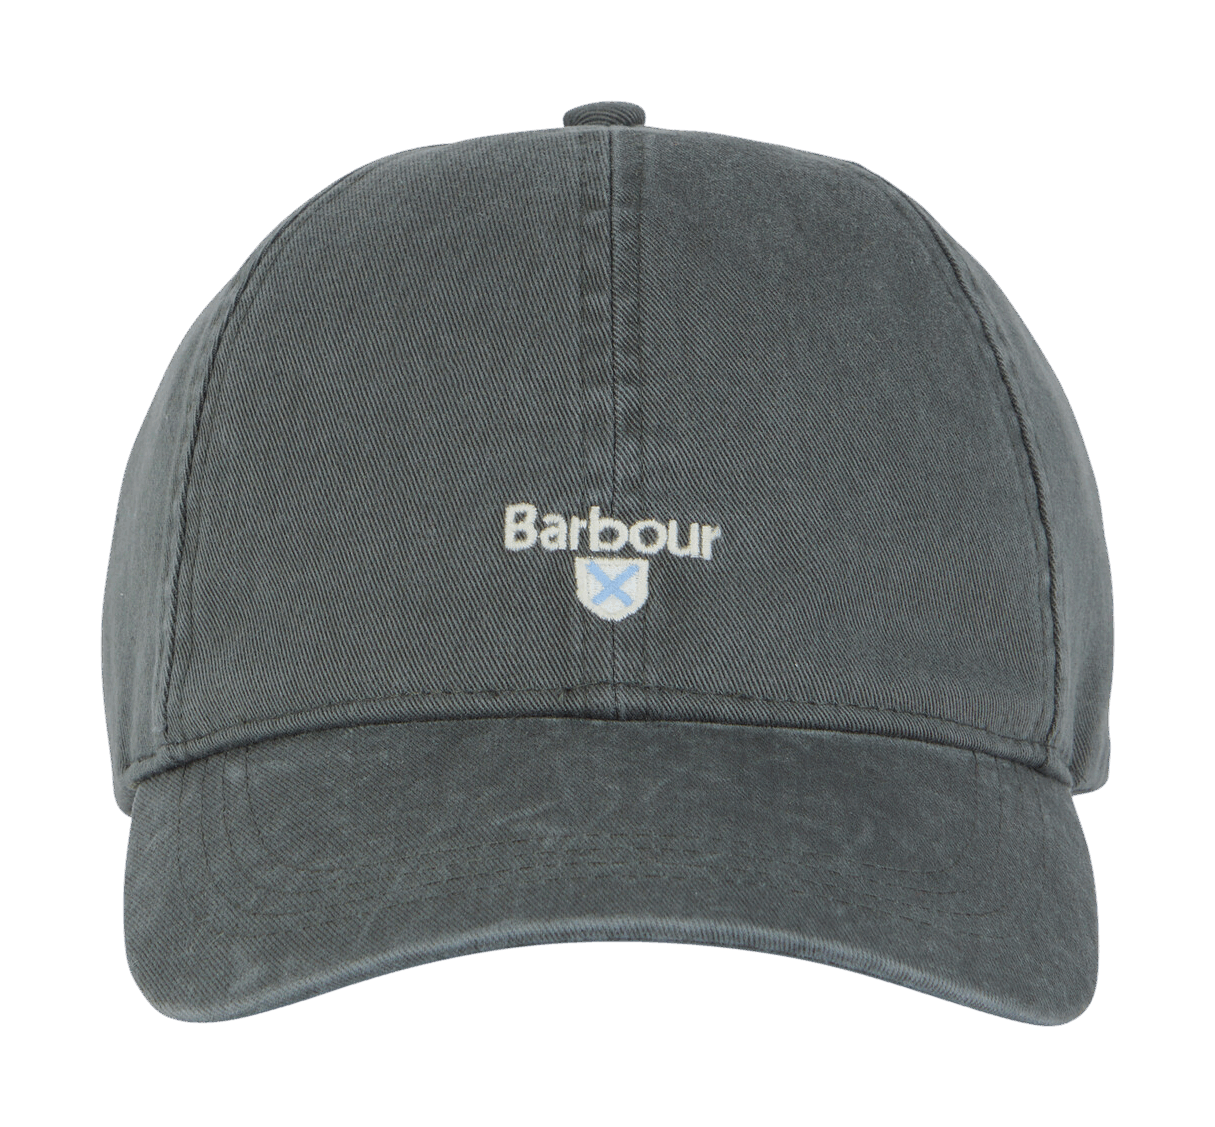 Barbour Cascade Sports Cap - charcoal